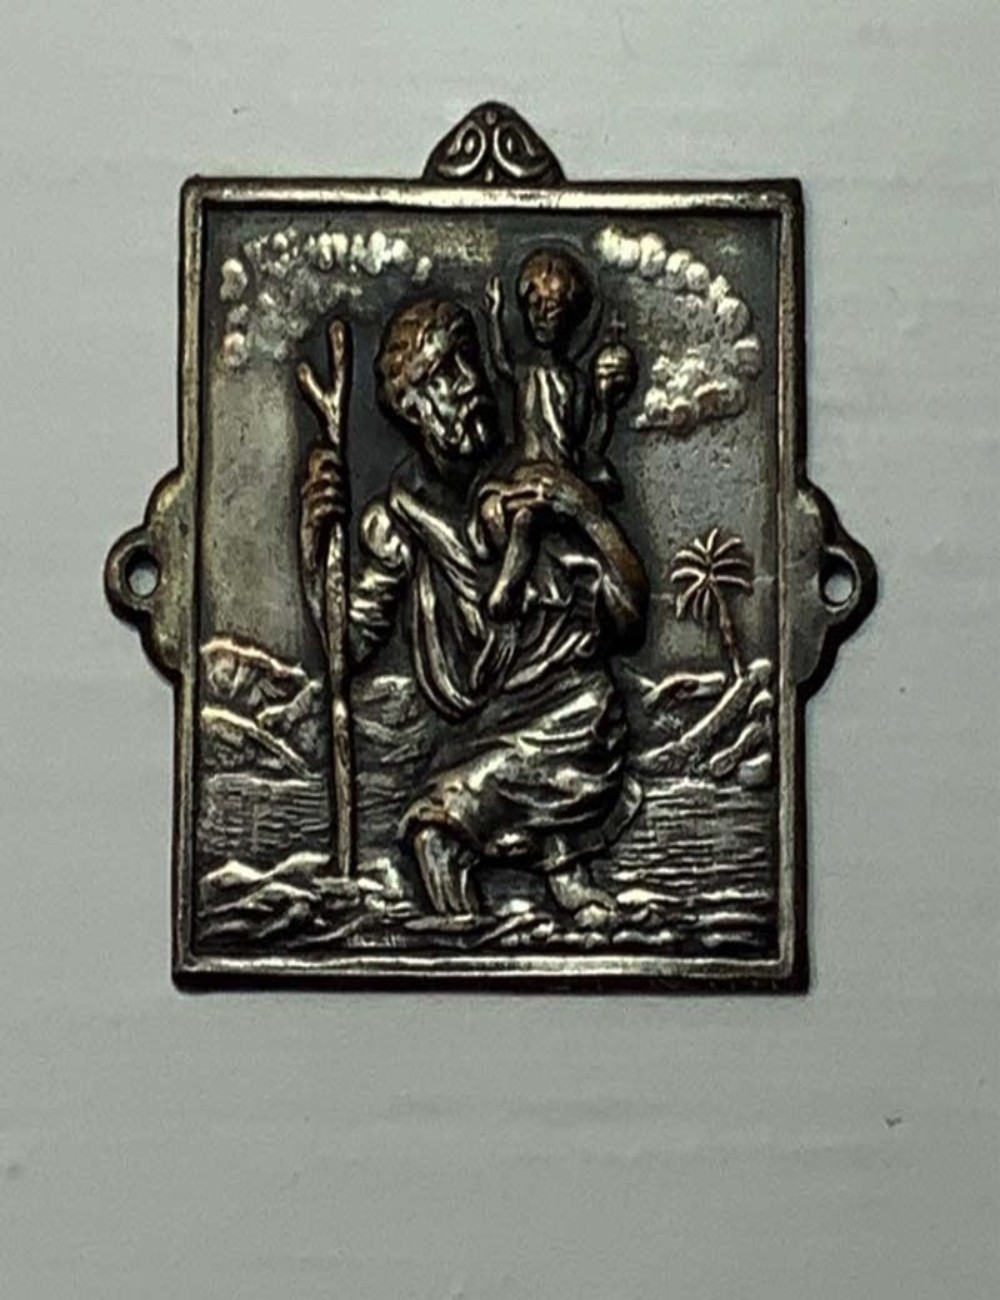 San Cristoforo plaque. Dimensions 4.3 cm x 4.3 cm